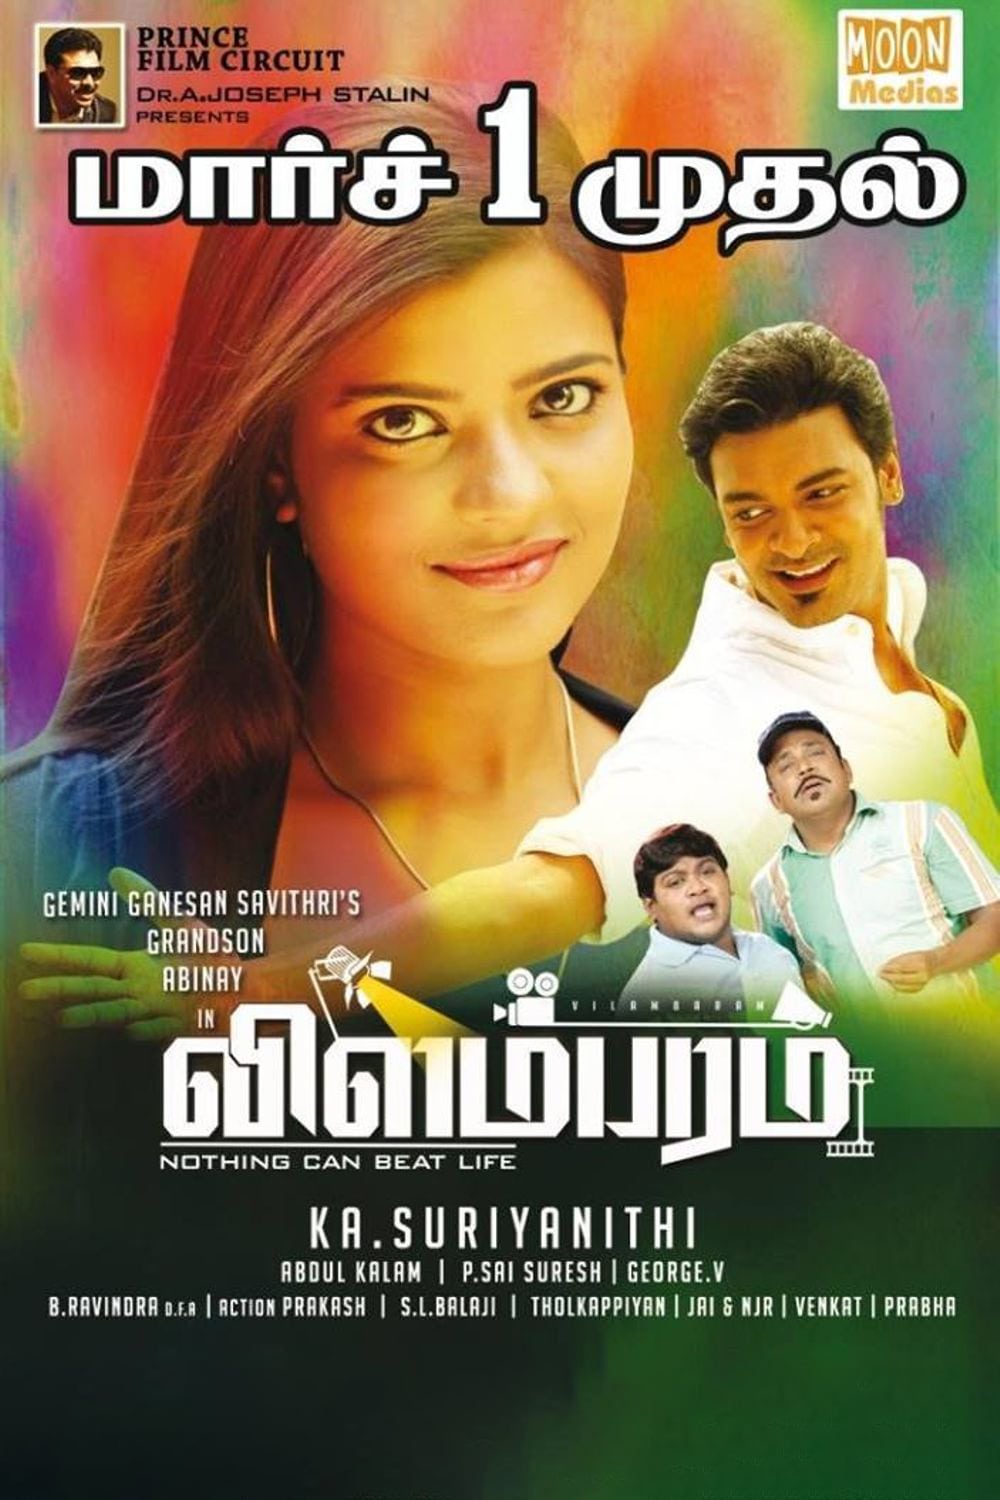 Poster for the movie "Vilambaram"